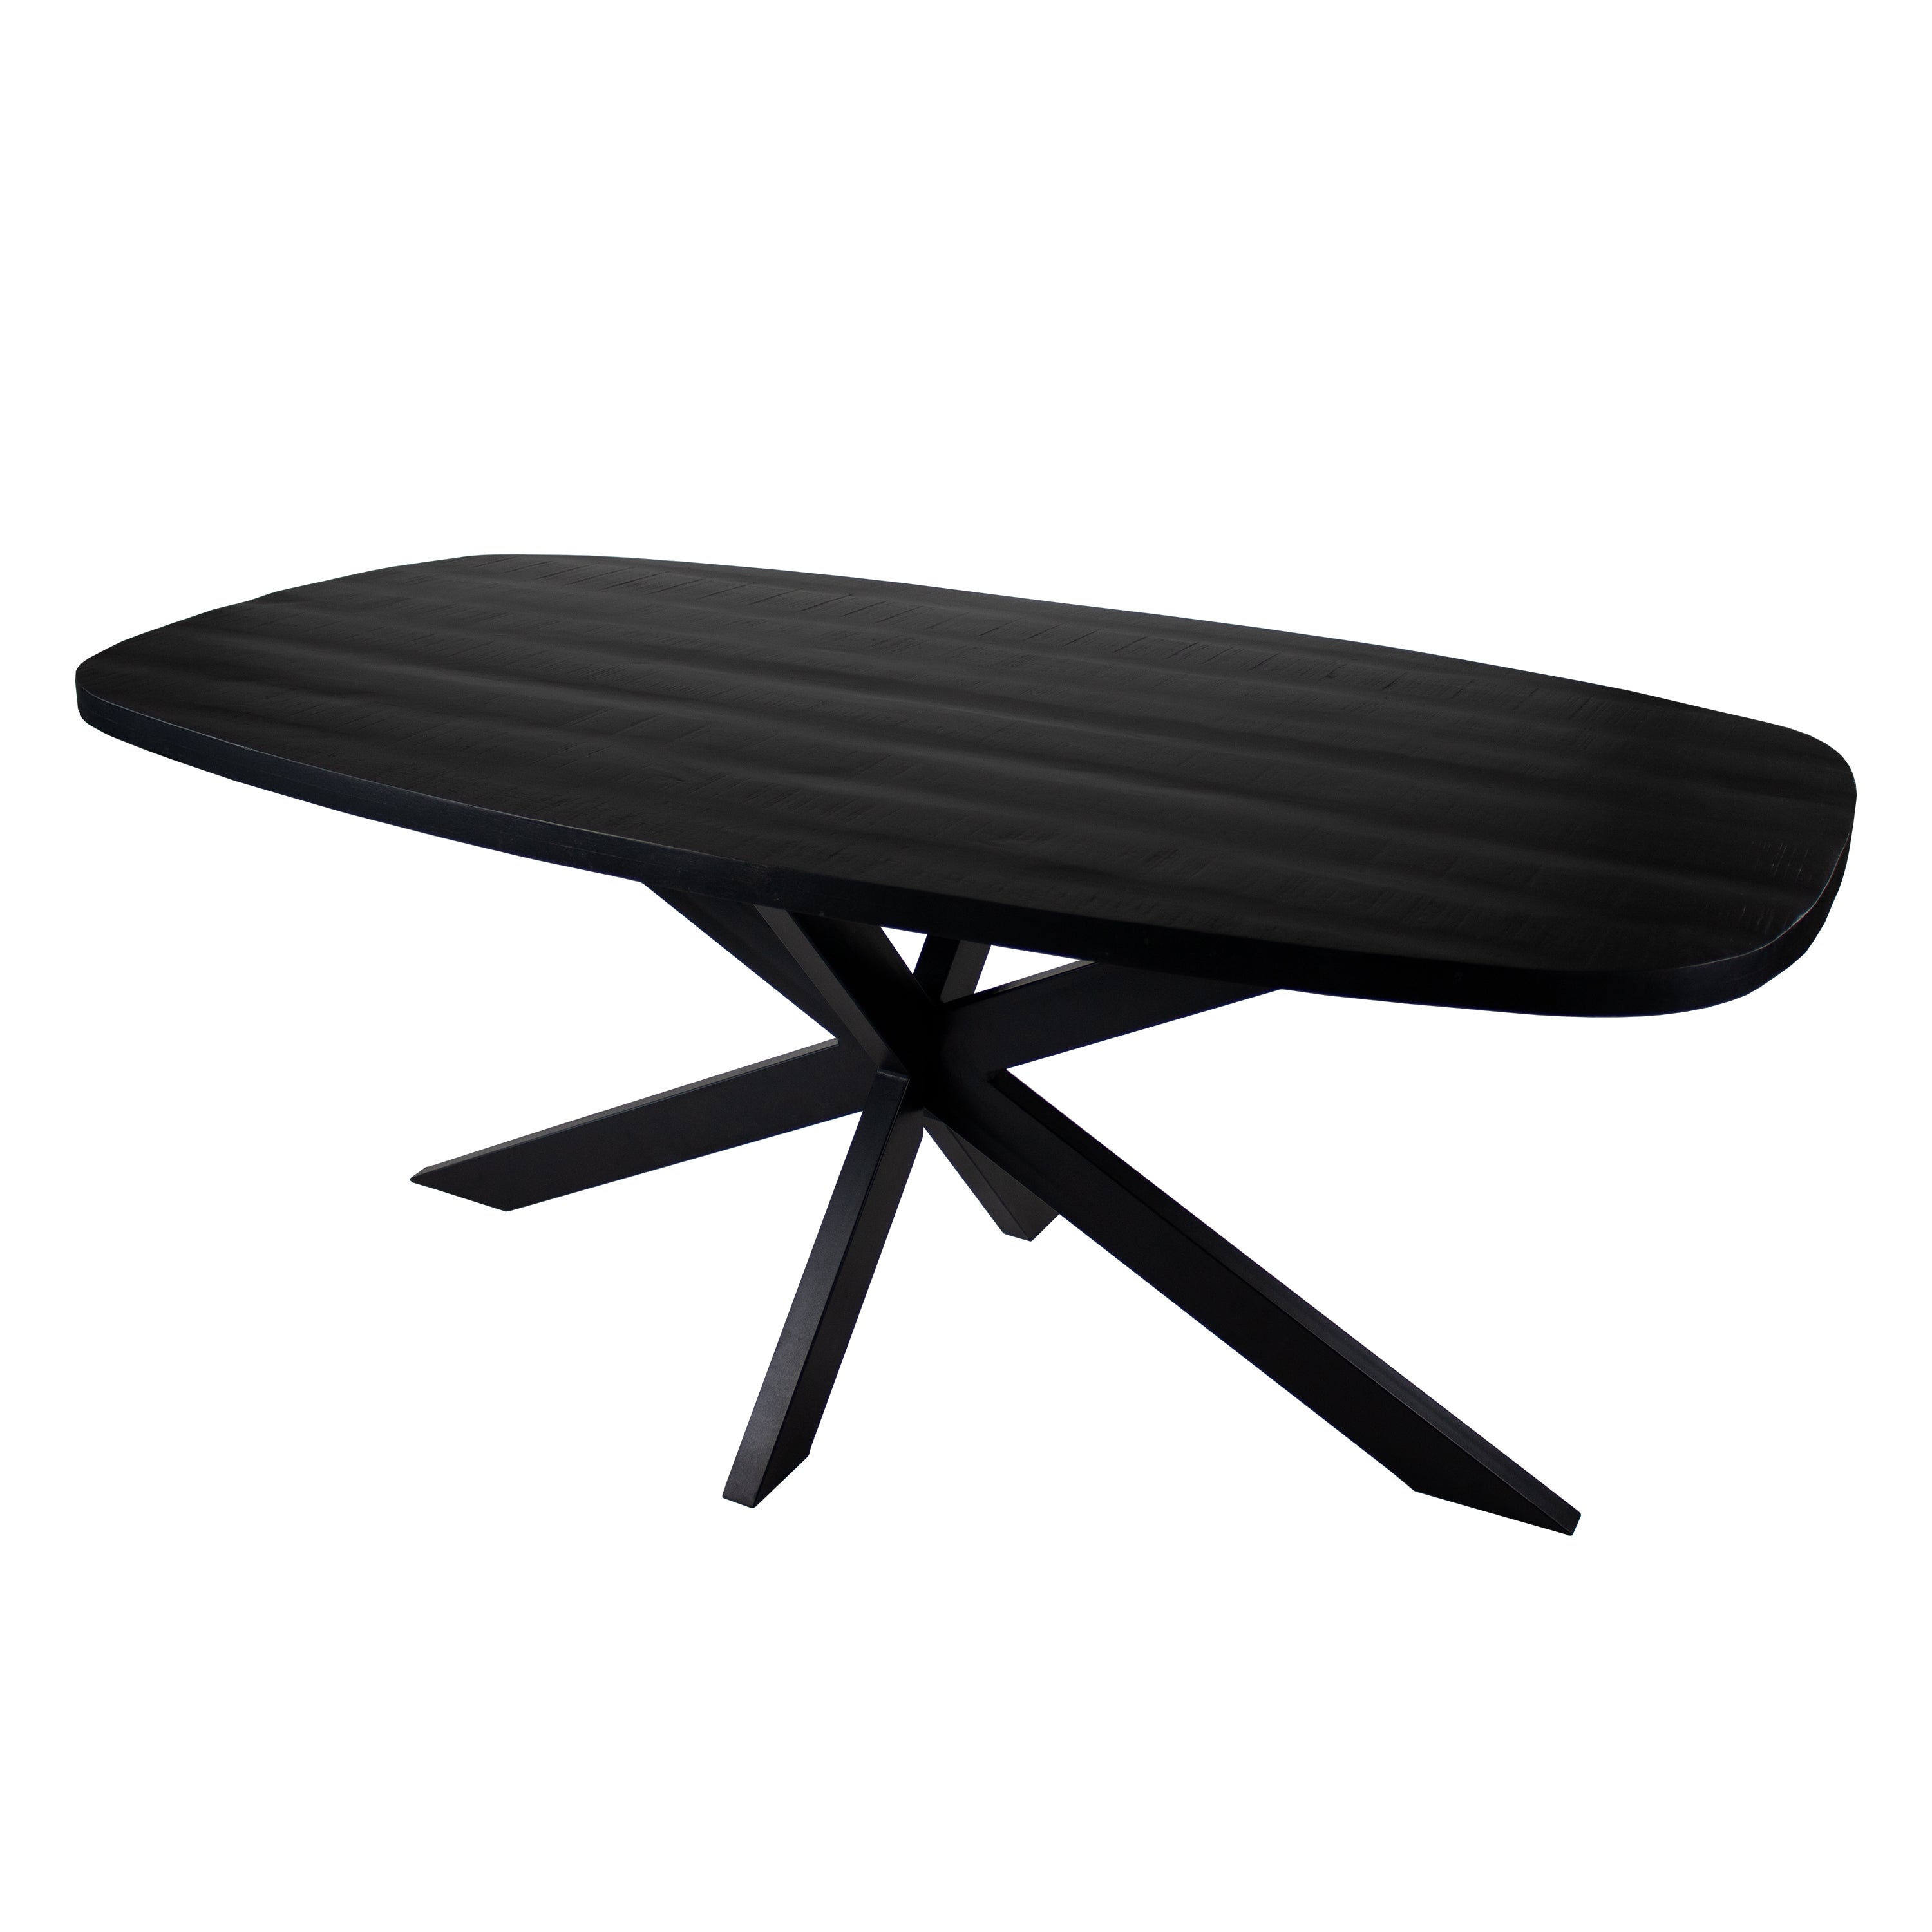 Kick dining table Dane - 210cm